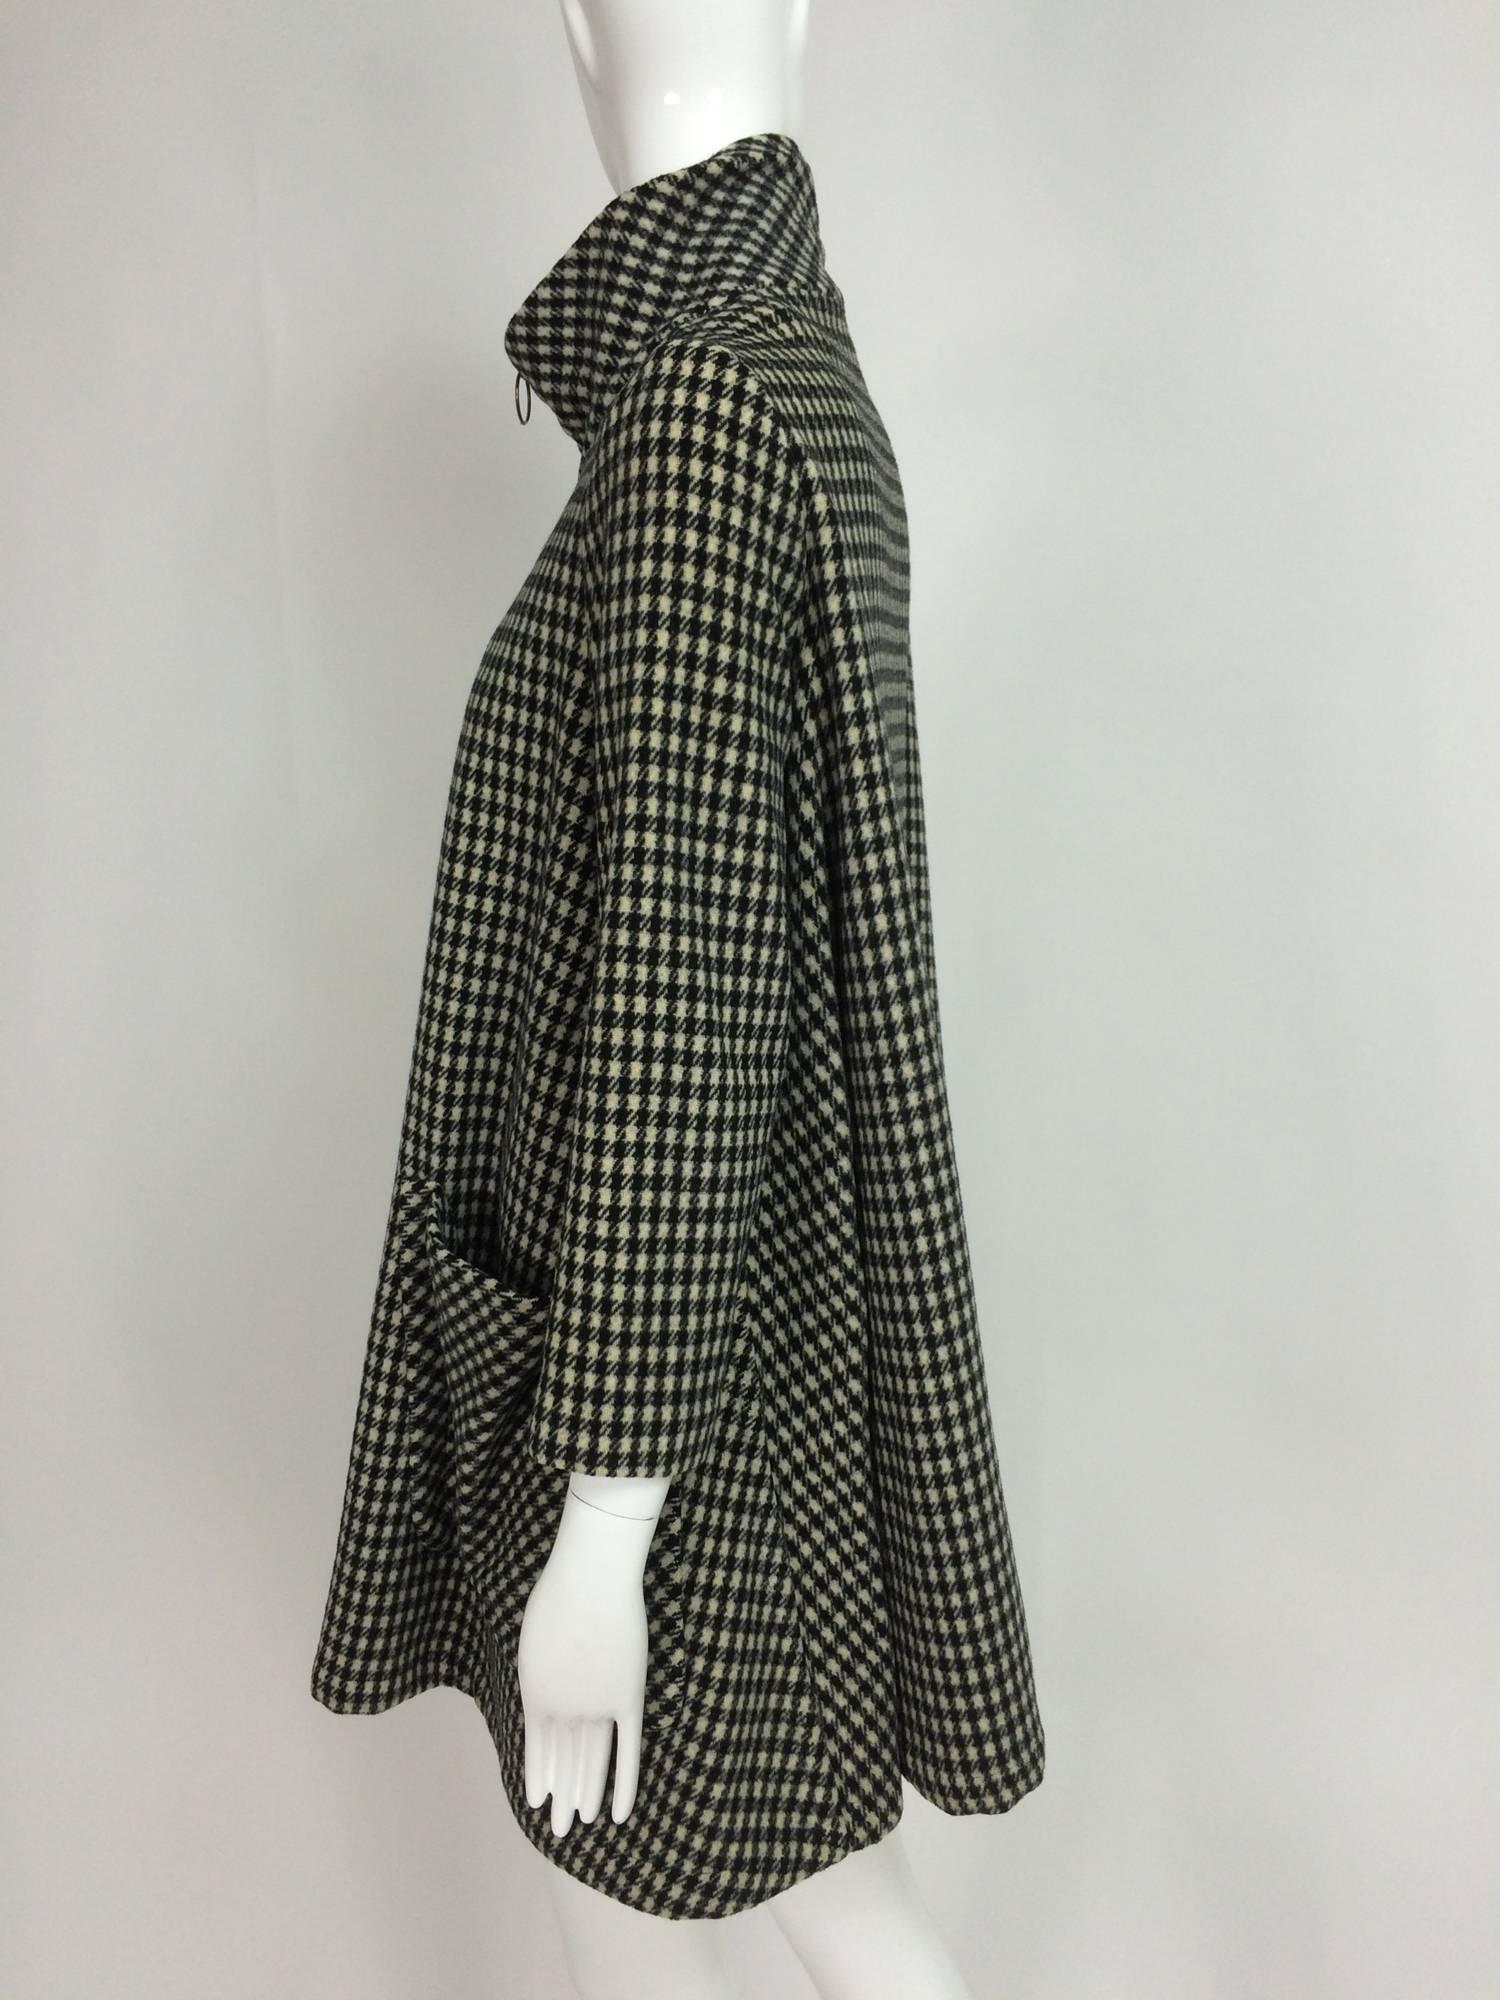 Mod black & white check zip front mini tent coat 1960s Jordan Marsh England 2